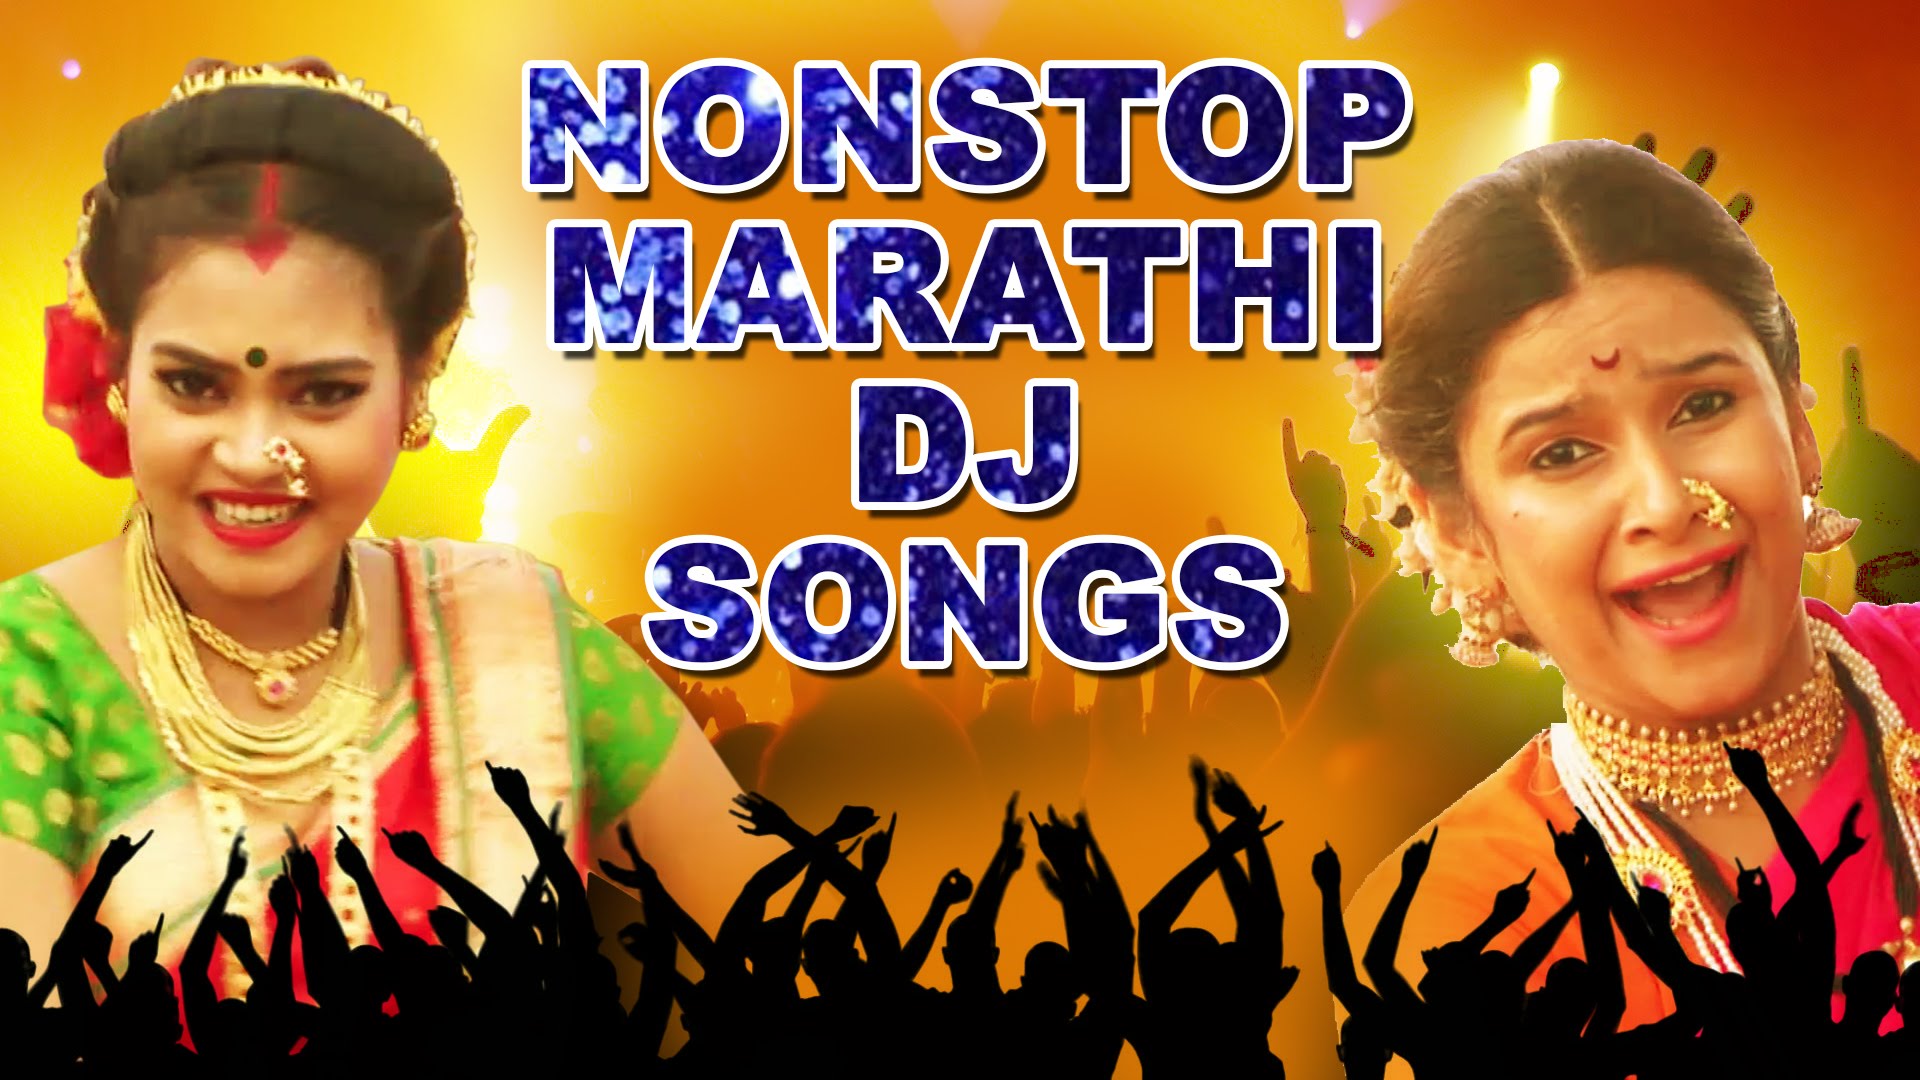 Dj marathi movie mp3 songs